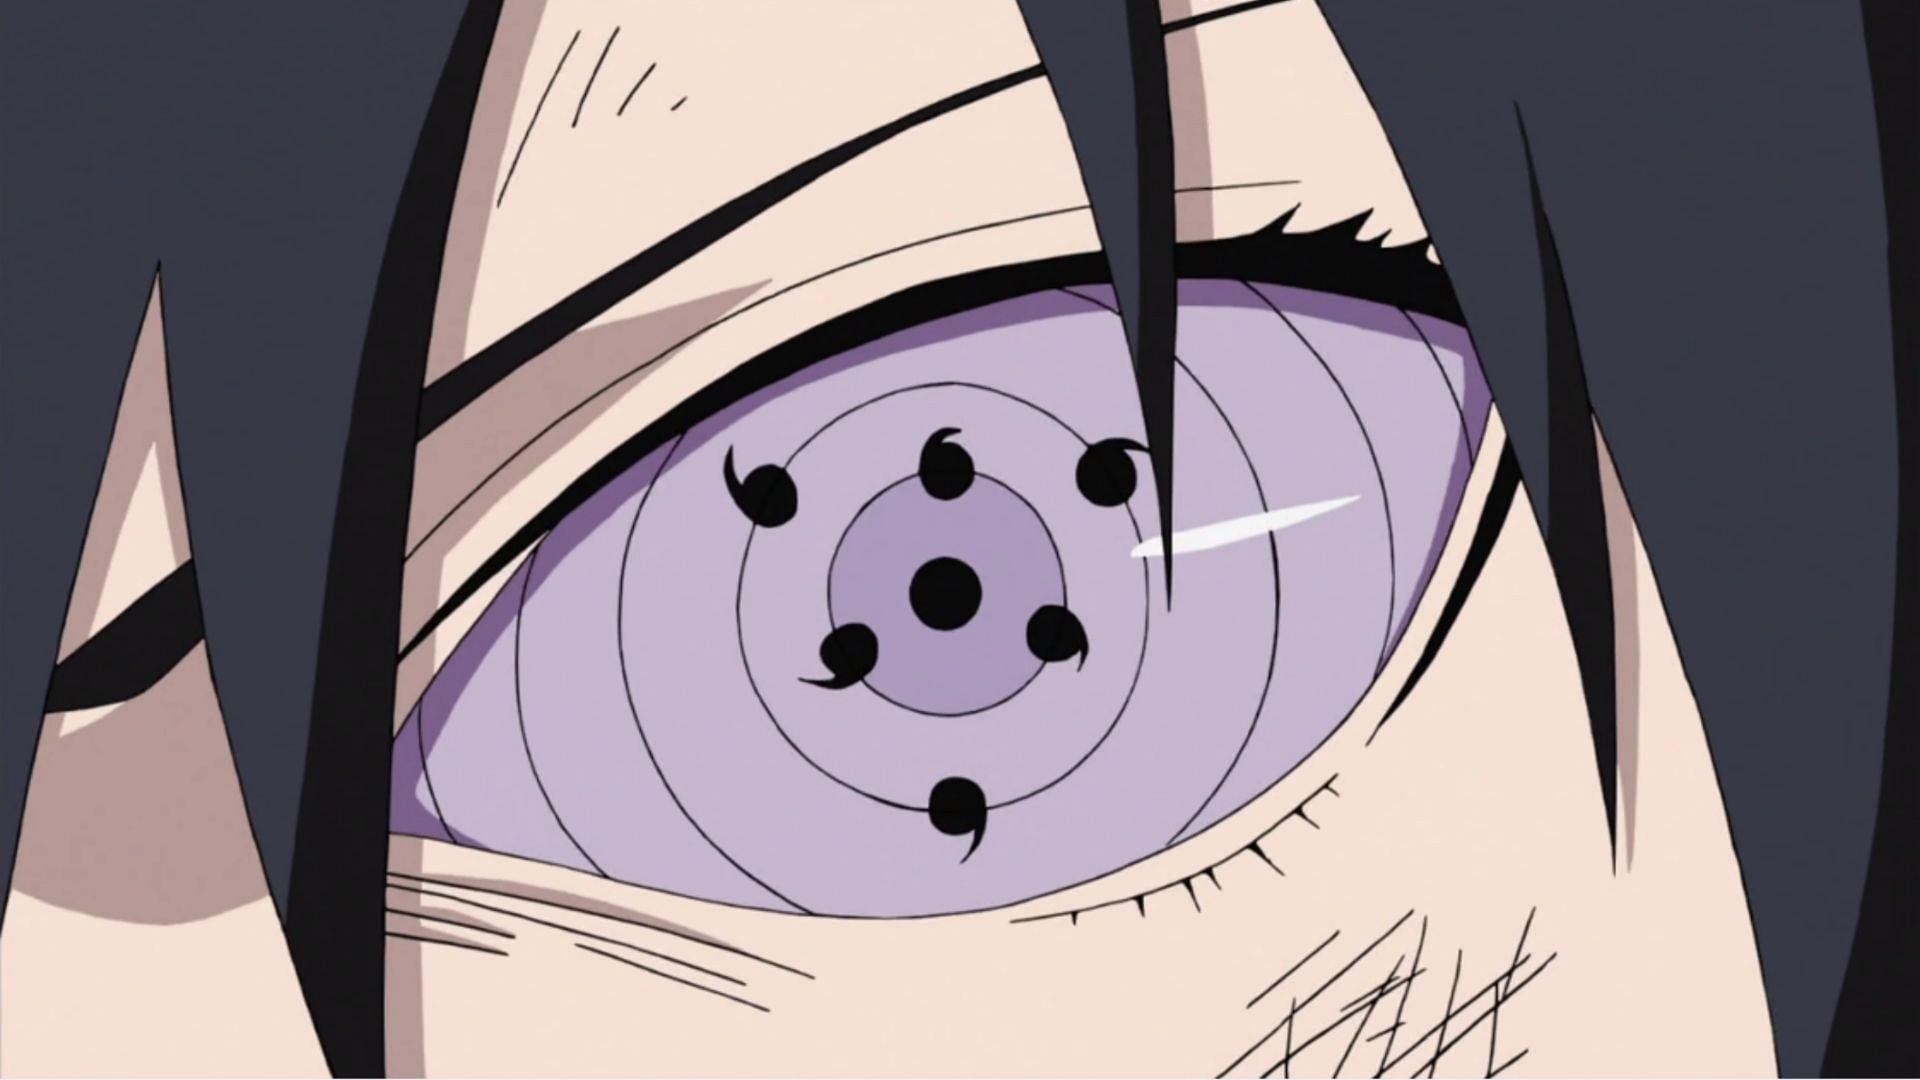 Rinnegan, as seen in Naruto (Image via Masashi Kishimoto/Viz Media/Studio Pierrot)